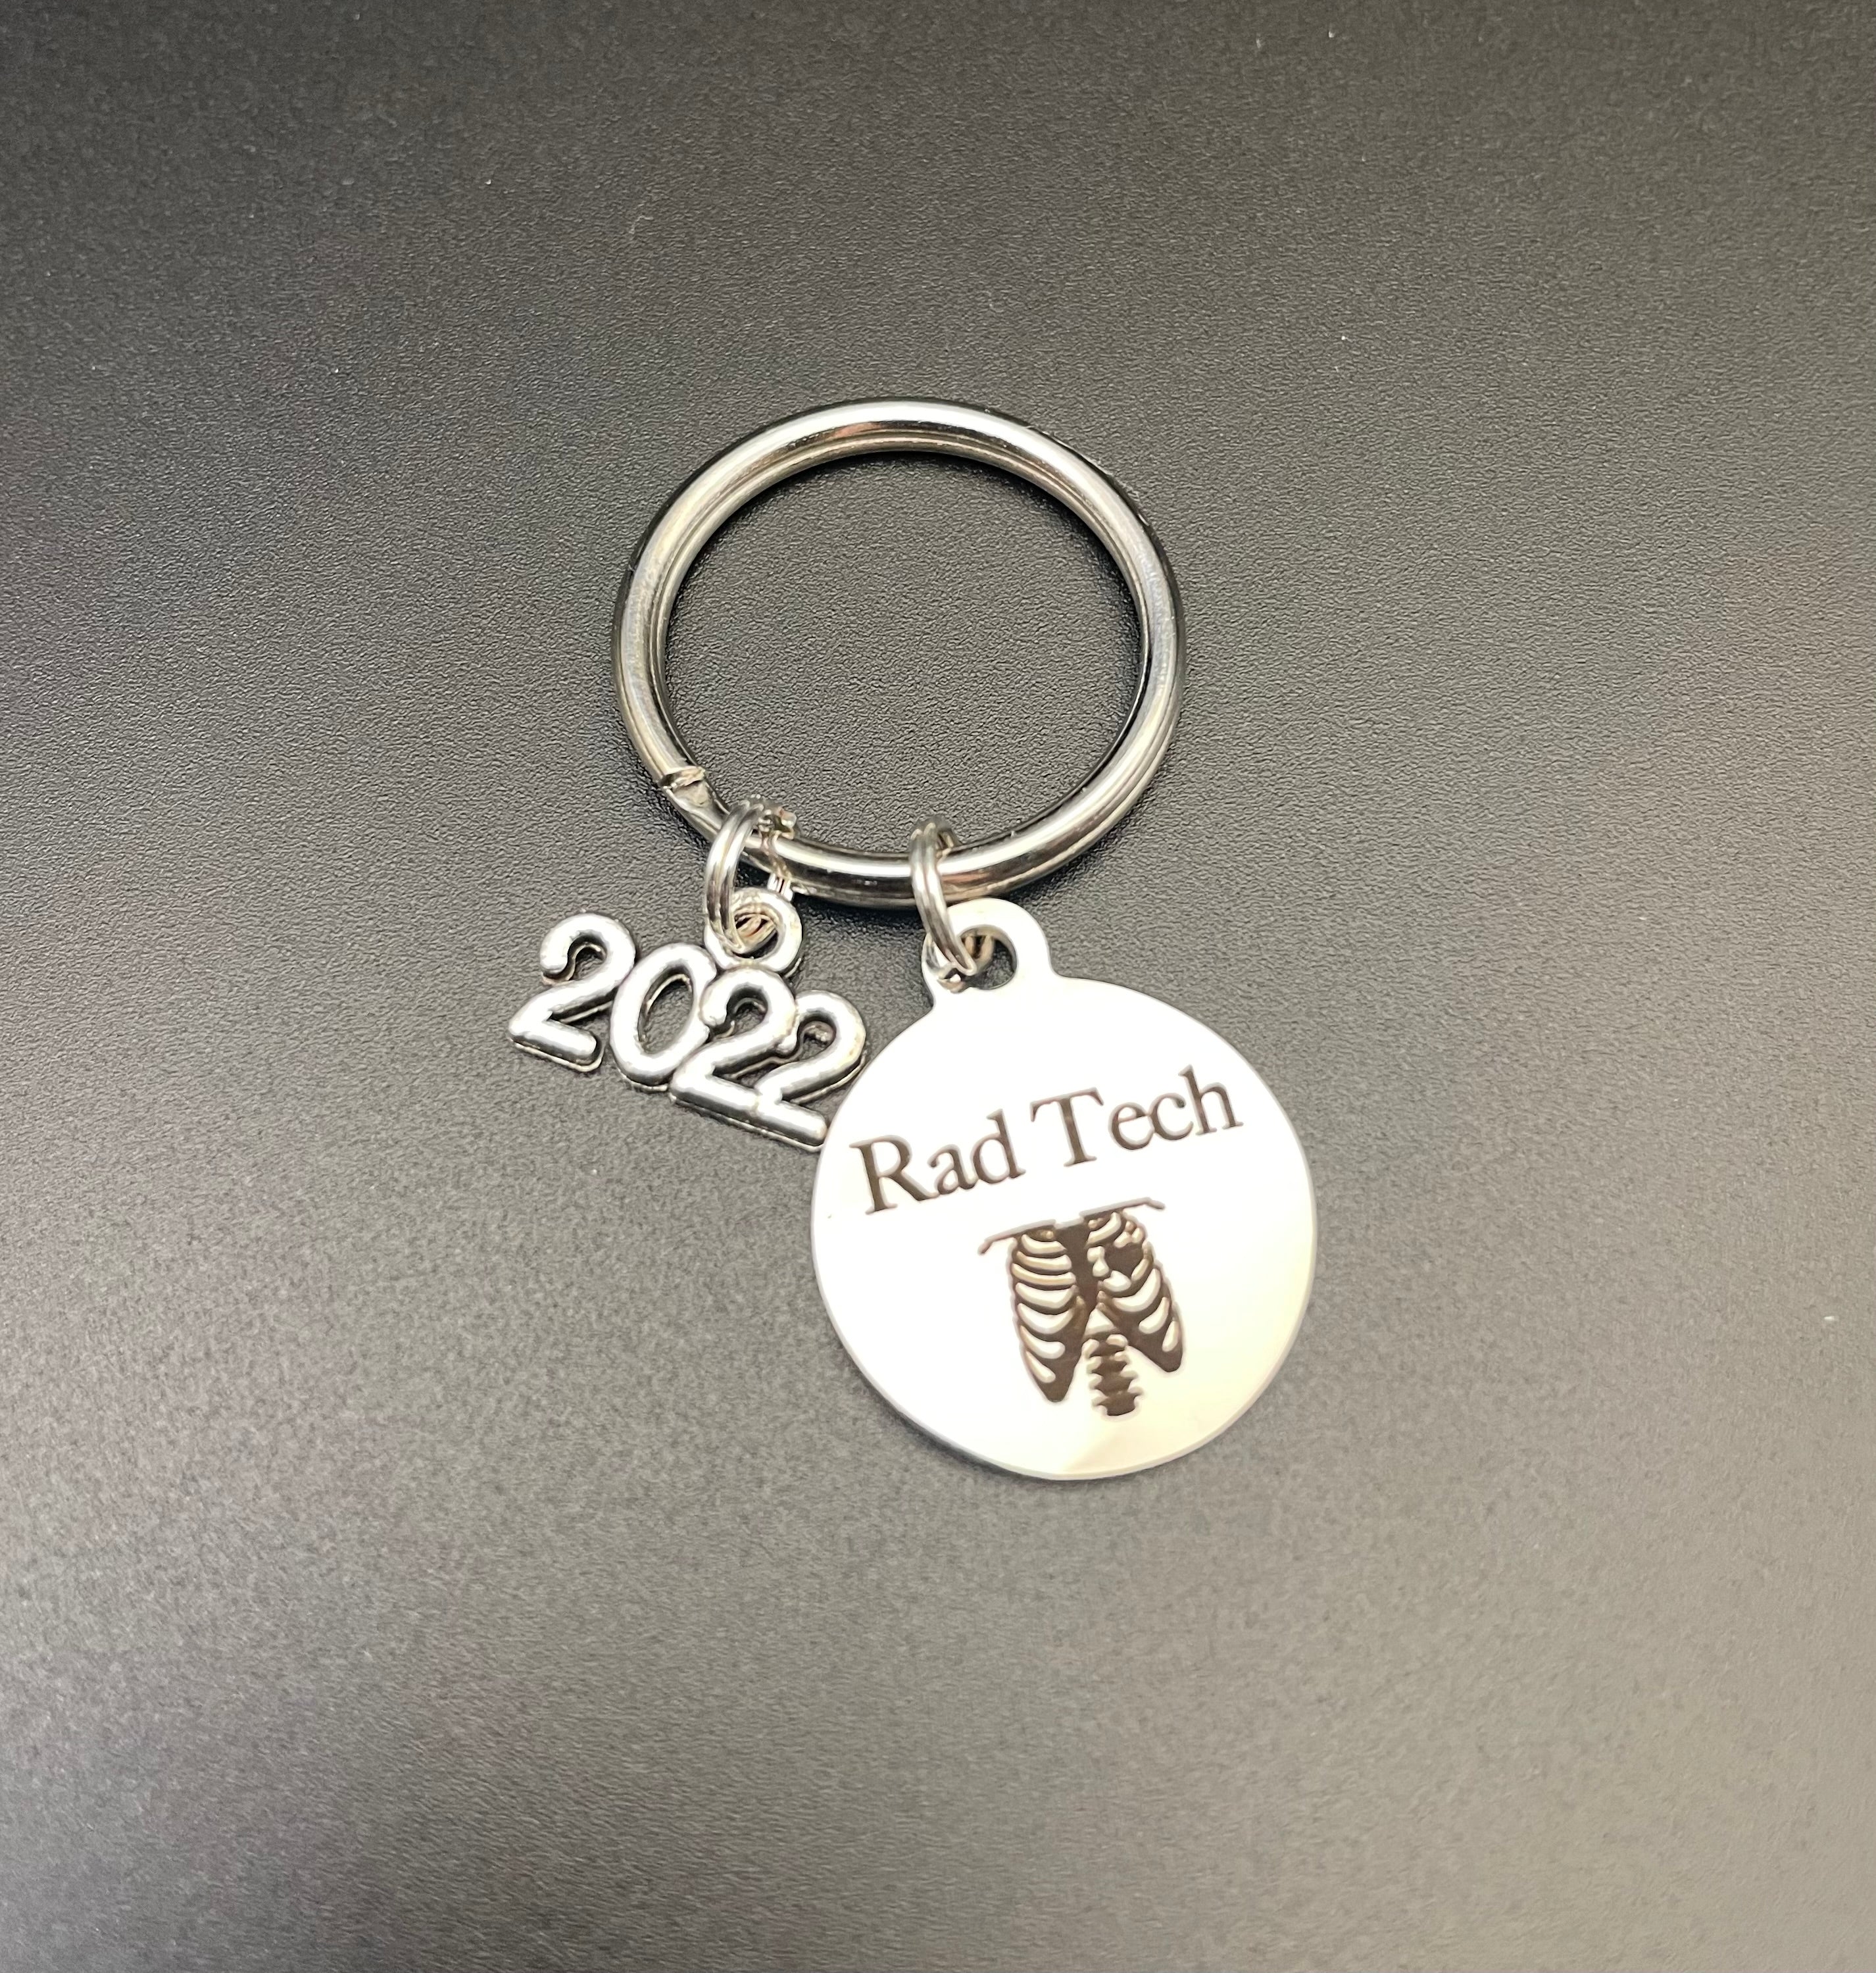 Xray Tech Graduation Gift, 2022, X-ray Tech Keychain, Radiology, Rad Tech